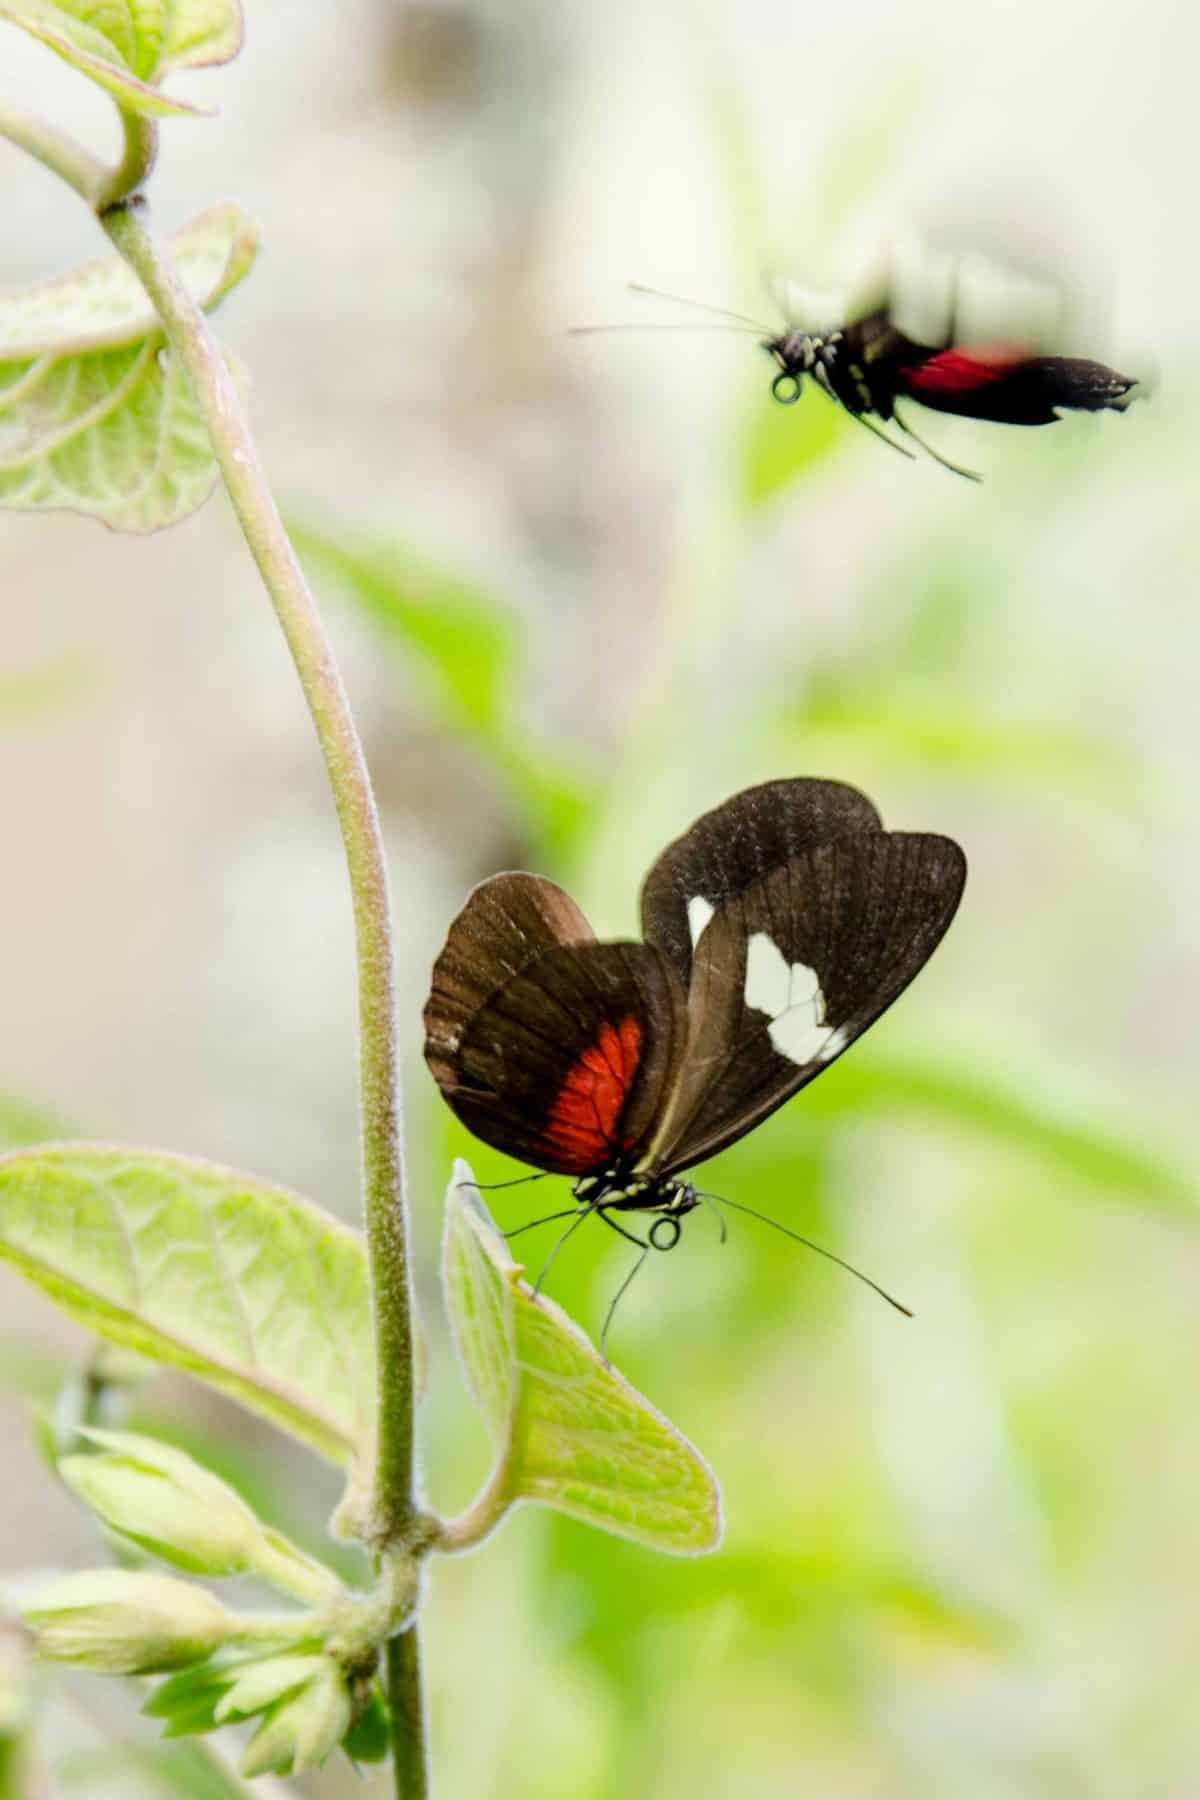 A Butterfly, Loja Province, Ecuador